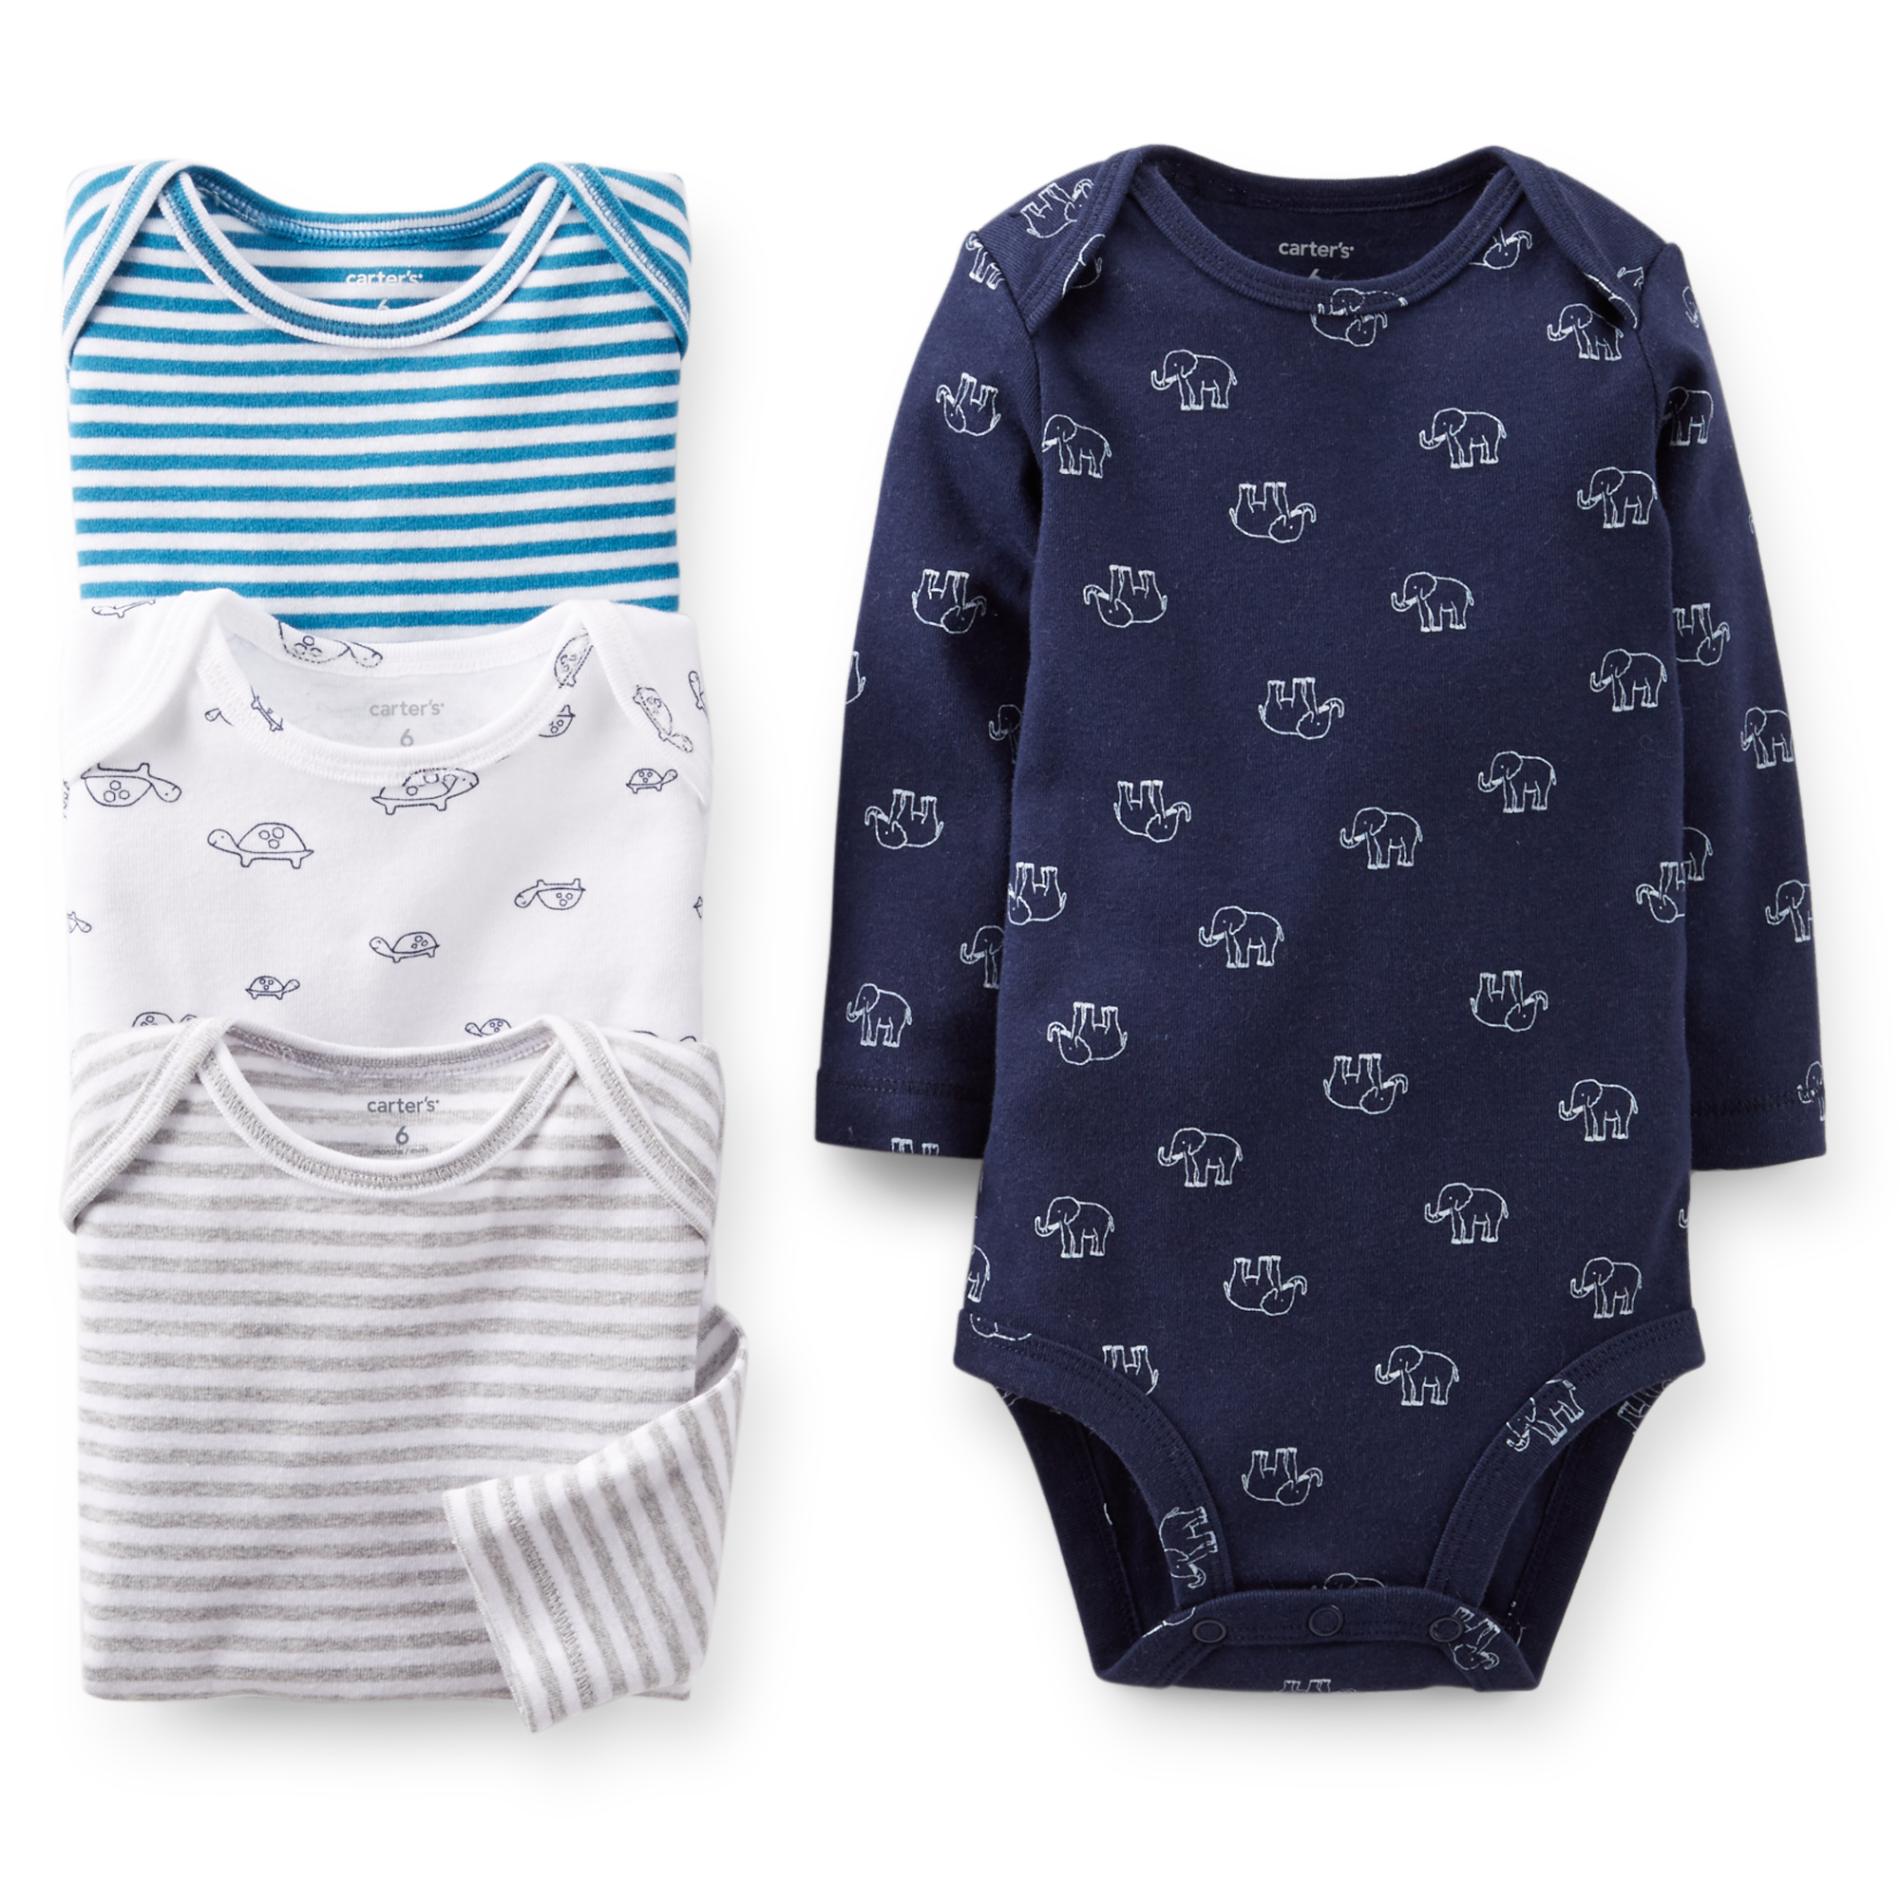 Carter's Newborn & Infant Boy's 4-Pack Bodysuits - Animals & Striped